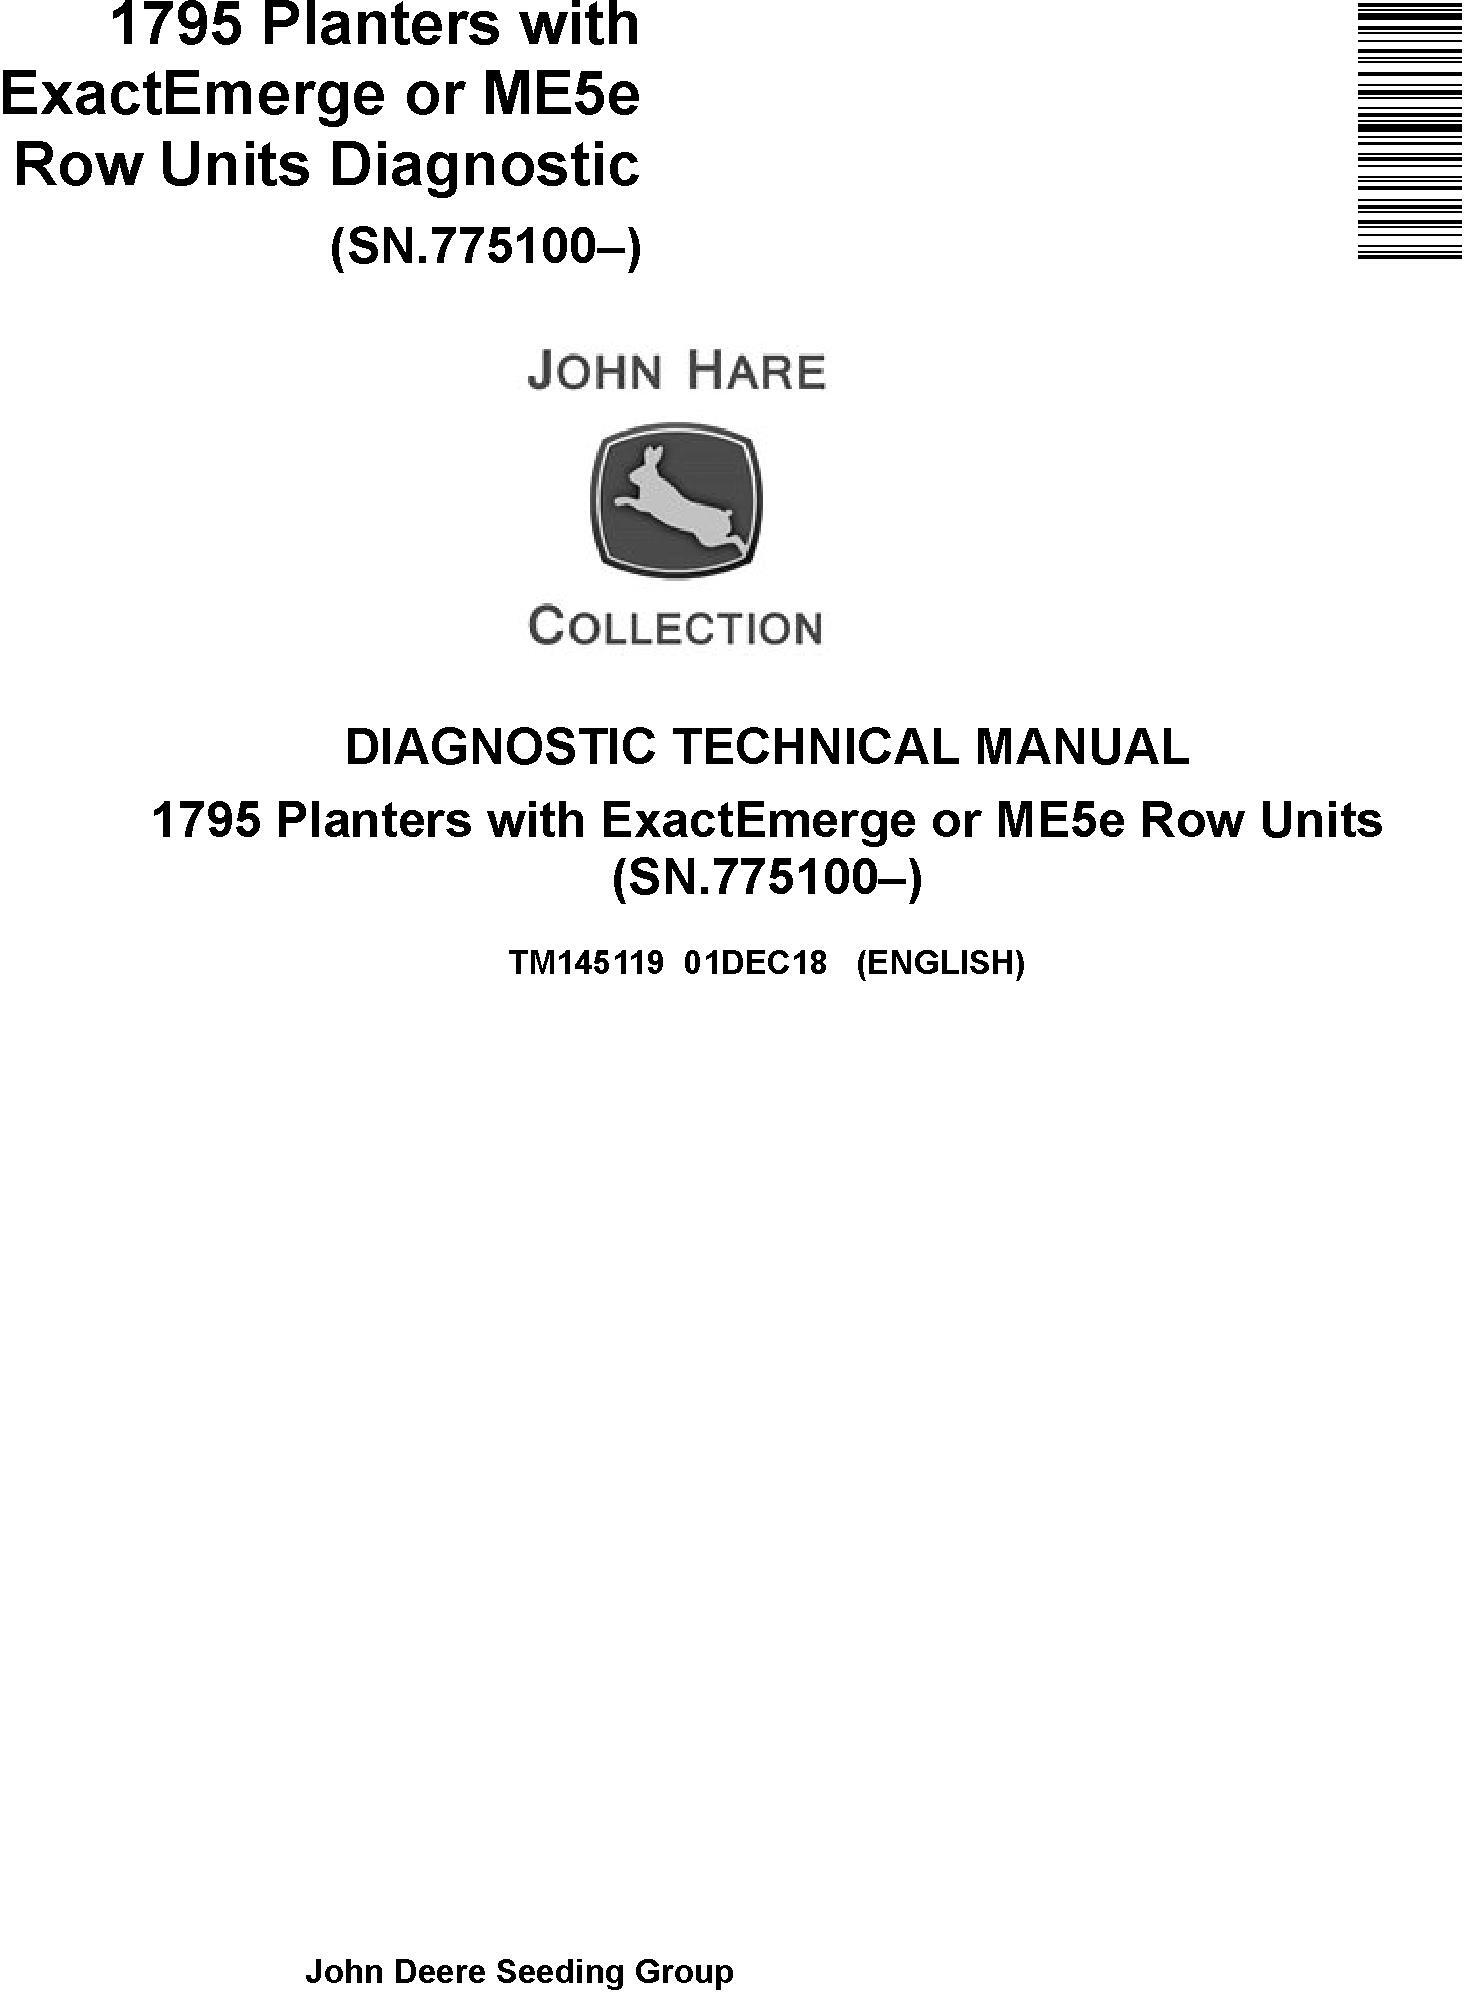 John Deere 1795 Planters with ExactEmerge or ME5e Row Units Diagnostic Technical Manual (TM145119)